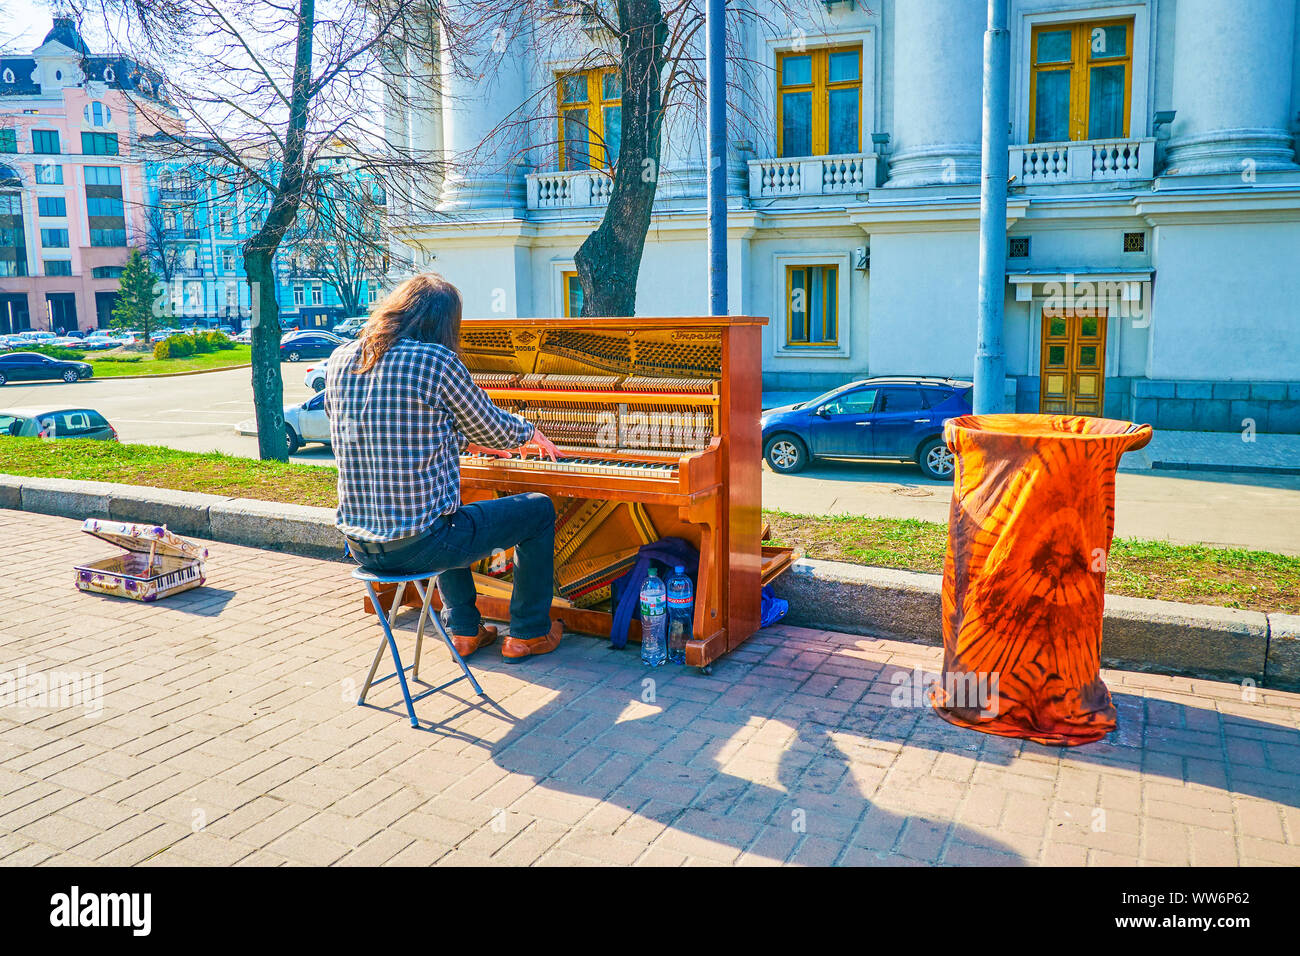 KIEV, UKRAINE - APRIL 13, 2018: The street musician entertains people in park on Saint Vladimir's Hill, playing piano, on April 13 in Kiev. Stock Photo